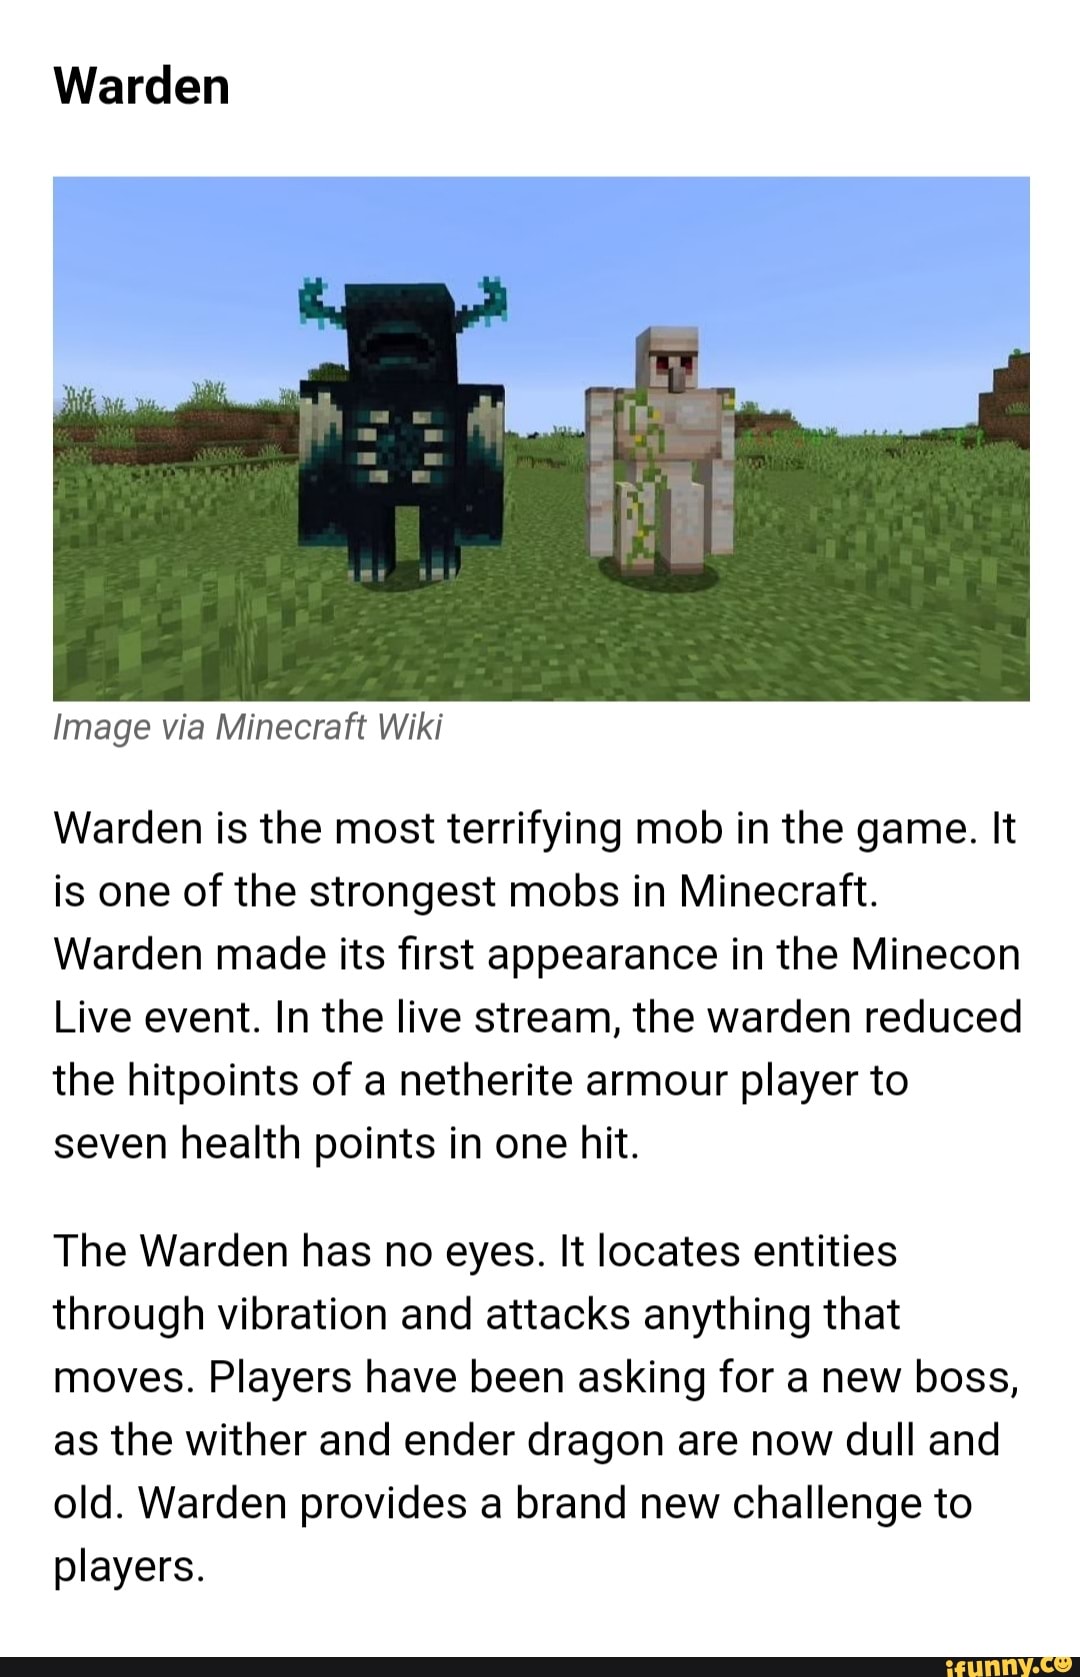 Ender Lord, Minecraft Mobs Wiki